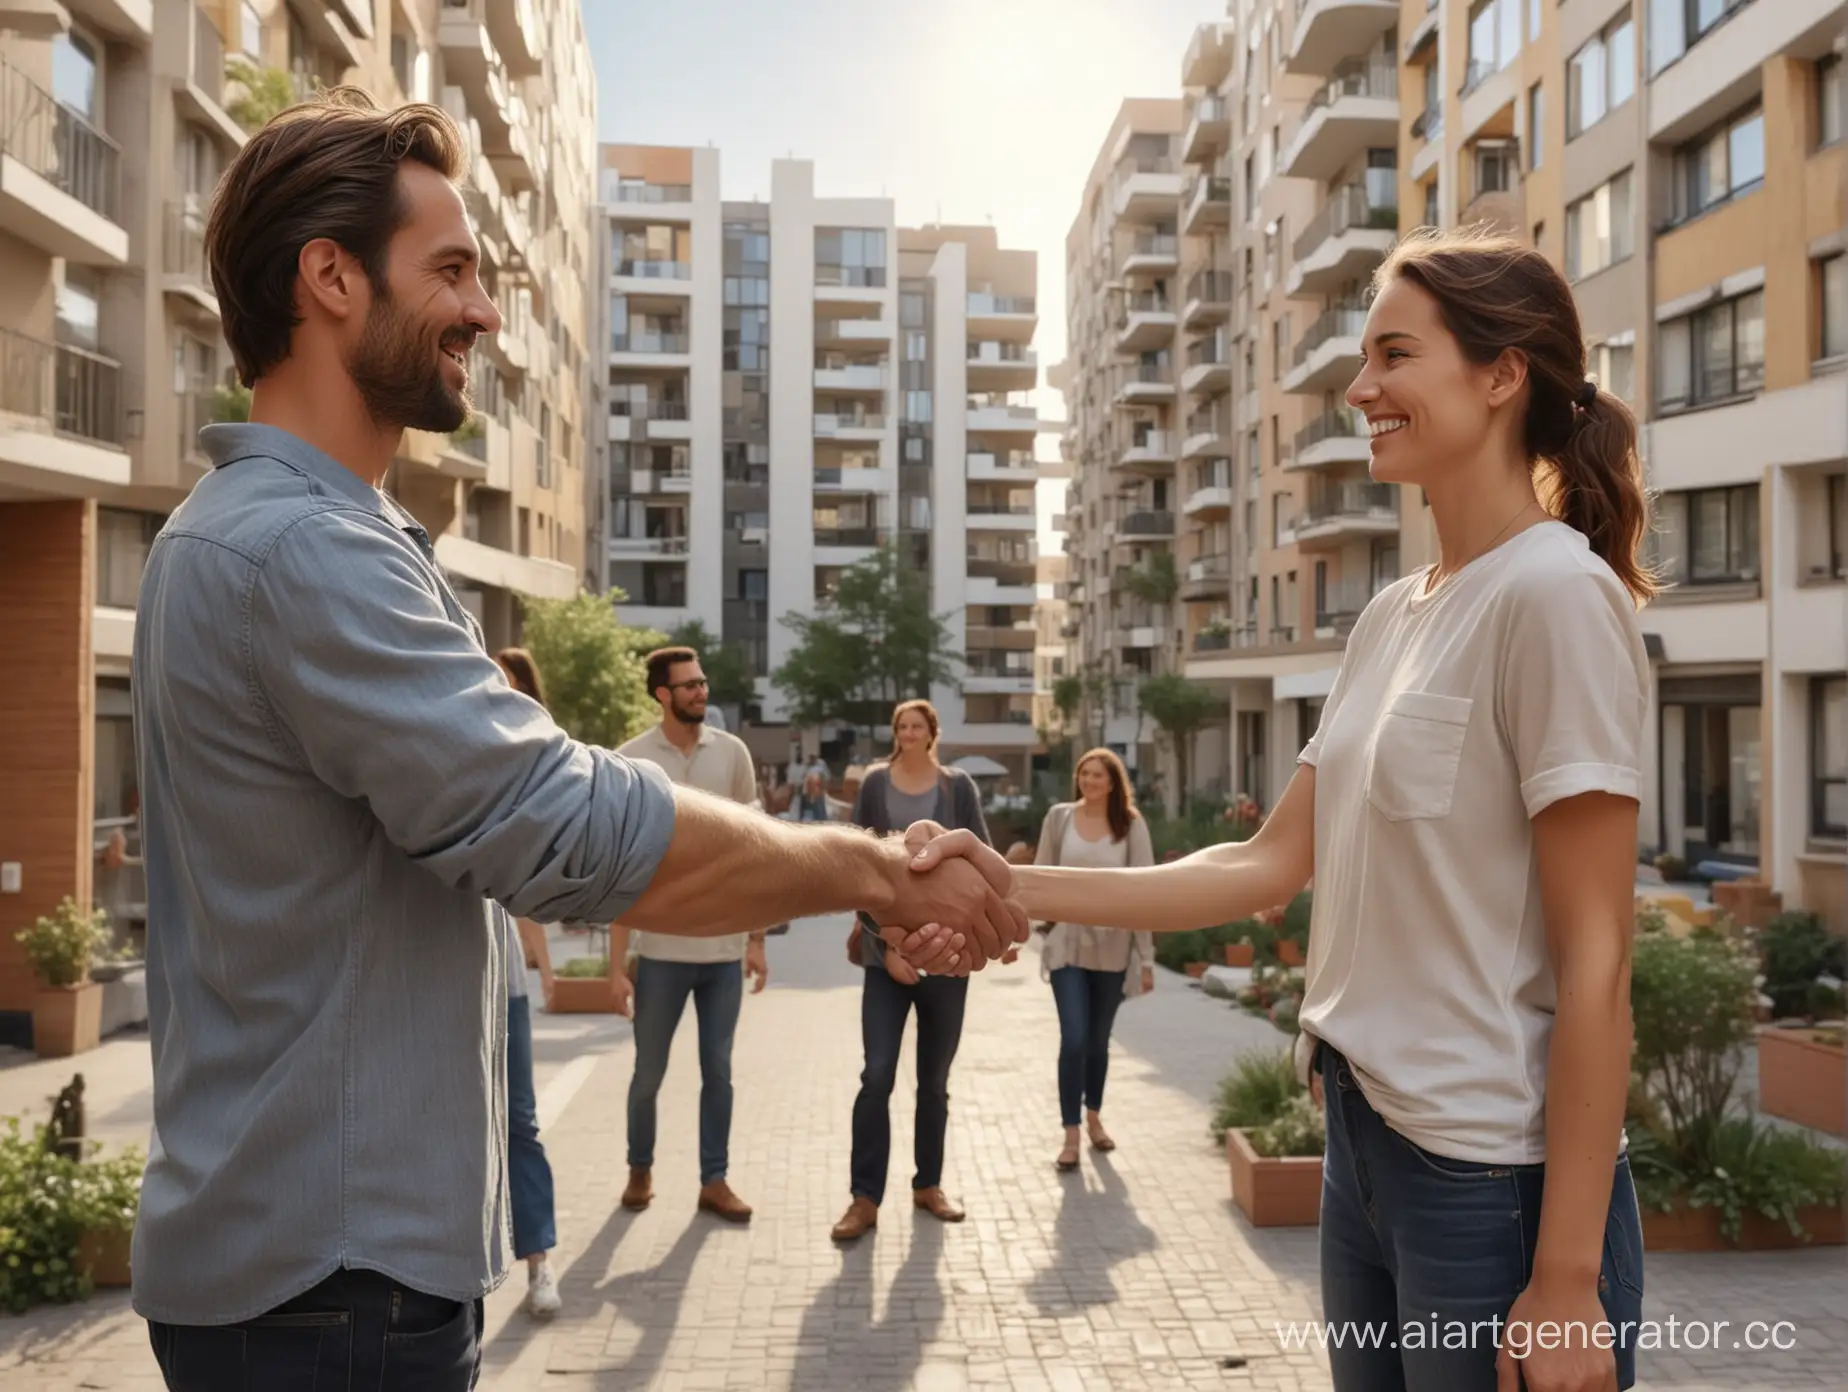 Friendly-Neighborhood-Handshake-Trust-and-Joy-in-Modern-Urban-Setting